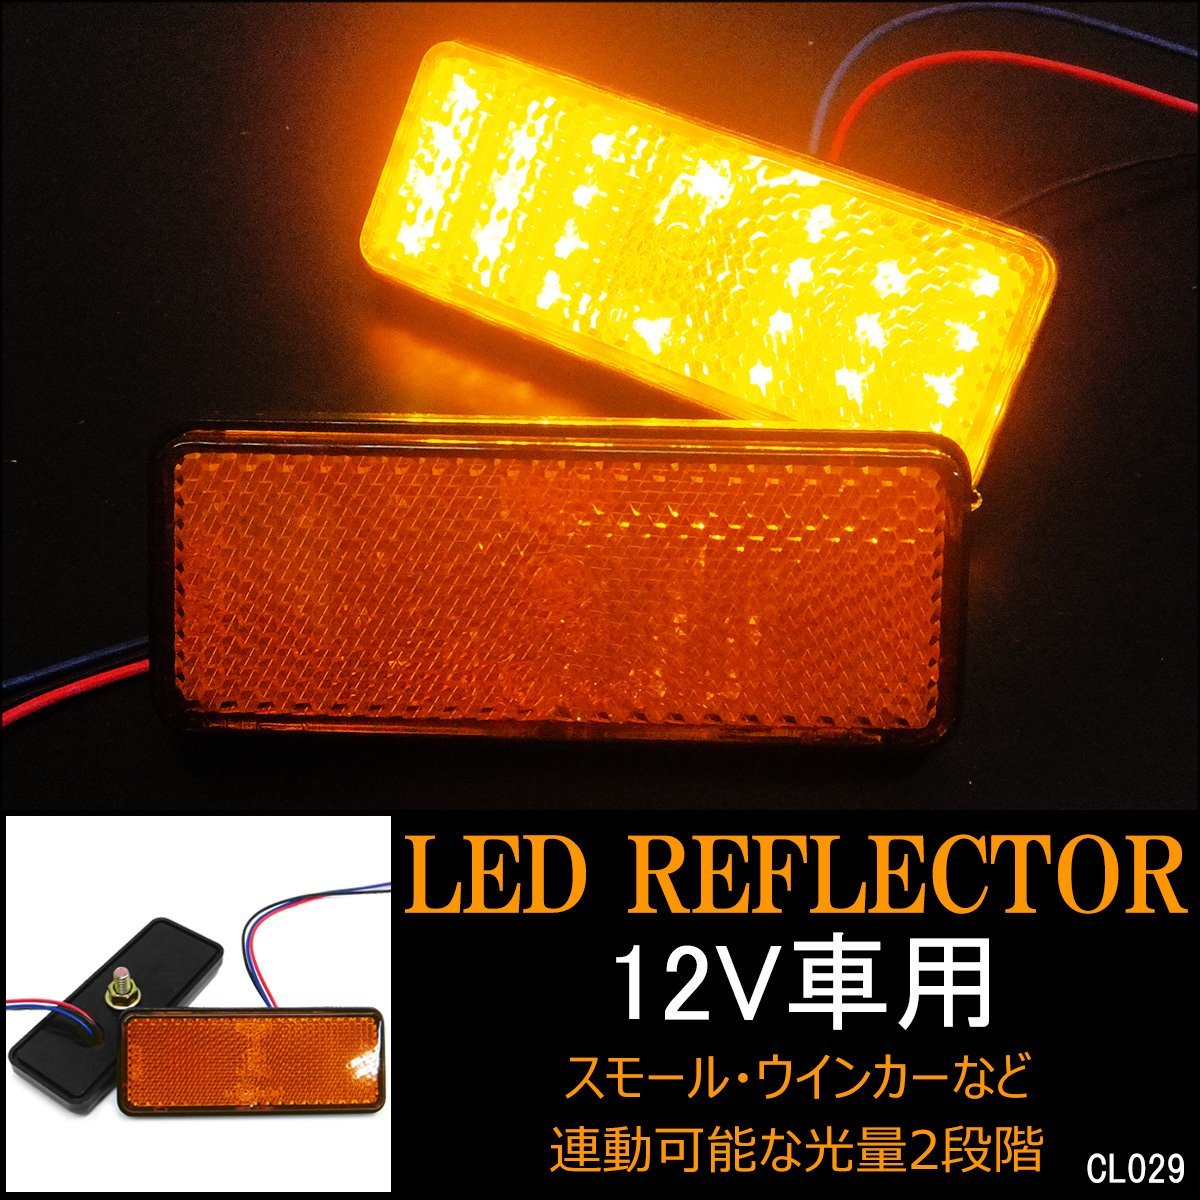 LEDリフレクター (4) 黄色 左右セット 12V バイク用 スモール・ウインカー連動 2段階光量 反射板 角型 アンバー メール便/16к_画像1